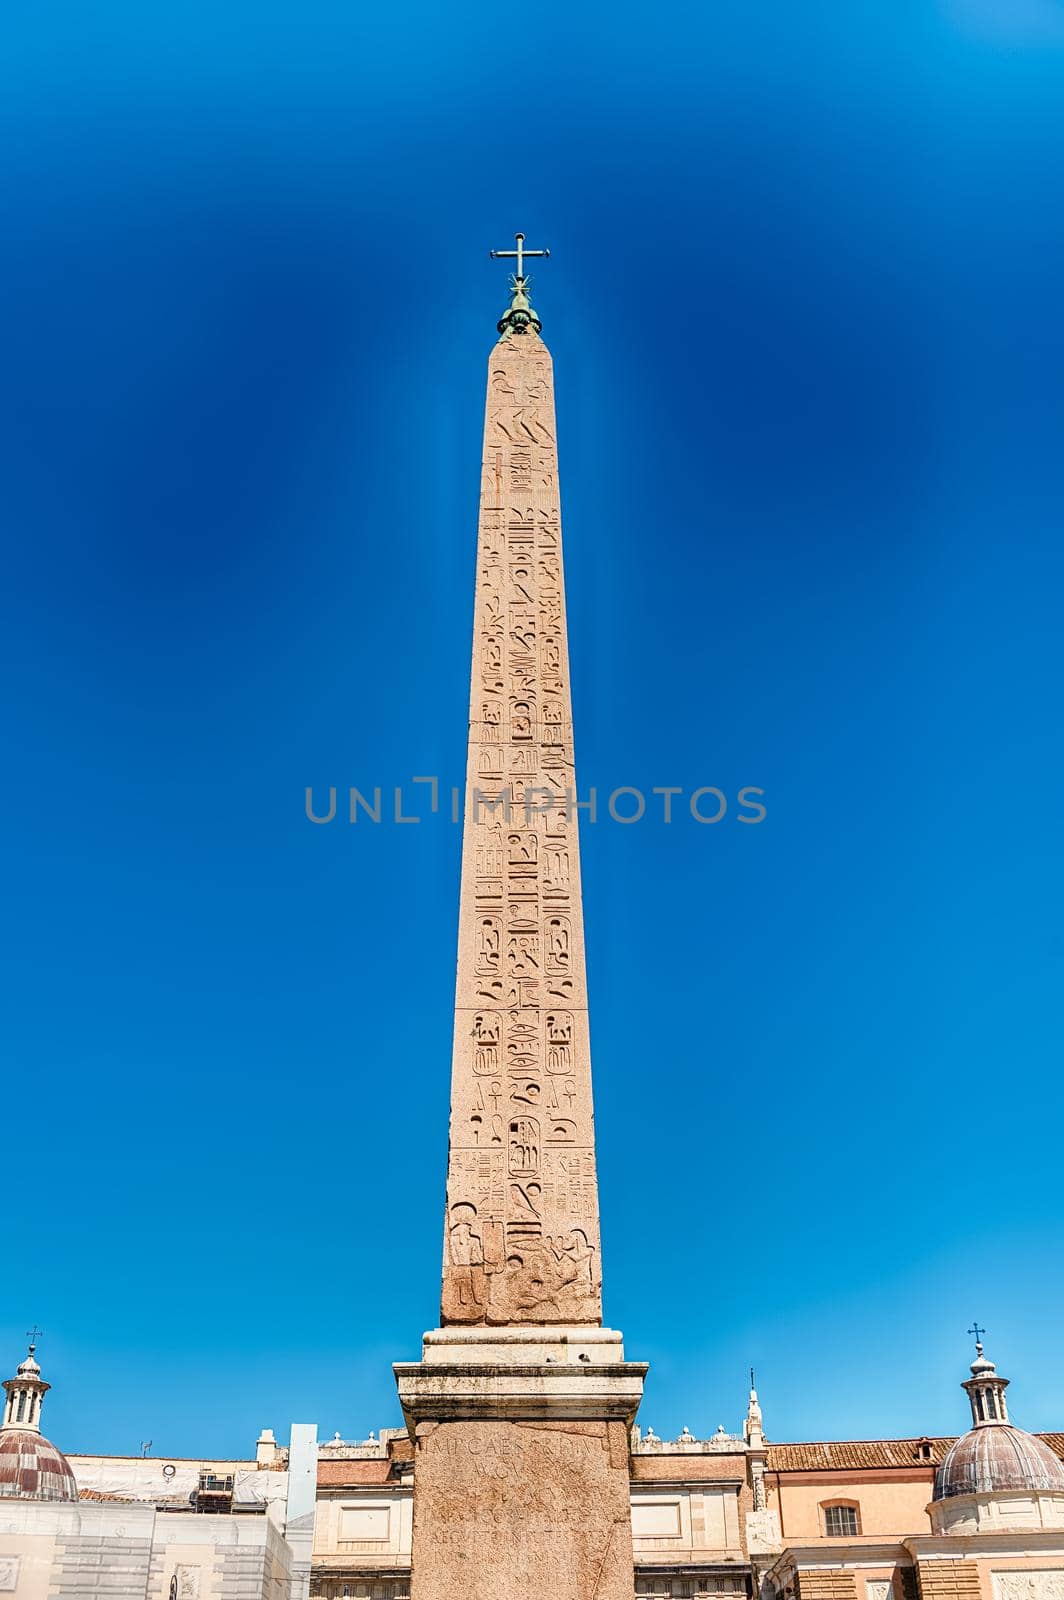 Egyptian obelisk of Ramesses II, iconic landmark in Piazza del Popolo, Rome, Italy